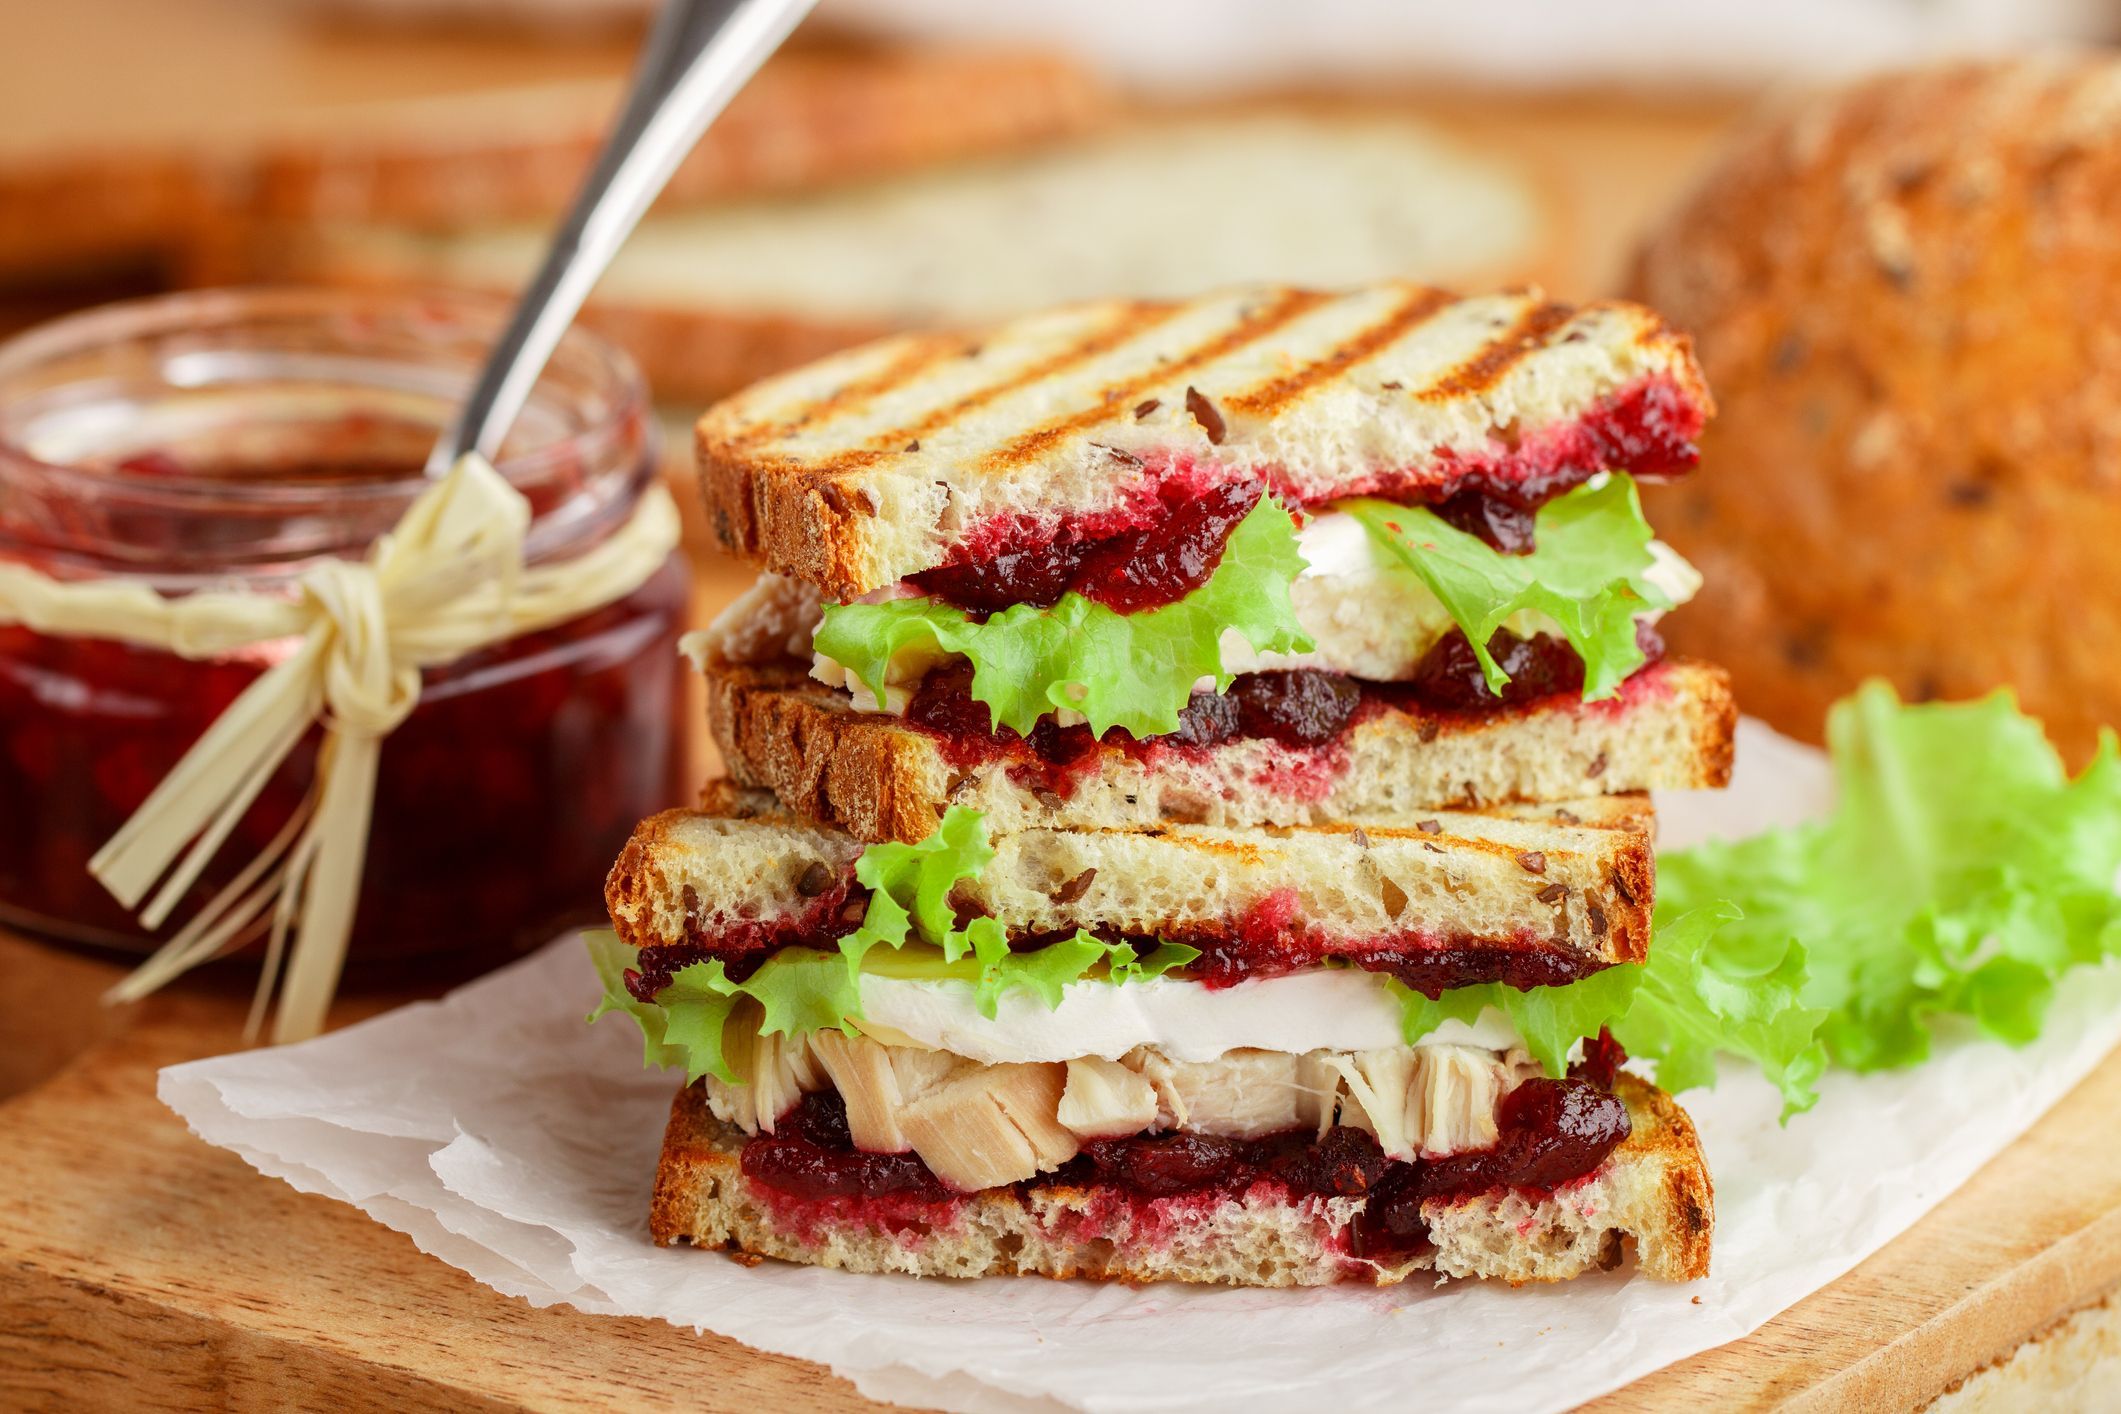 10 Best Leftover Turkey Sandwiches - What to Make with Turkey